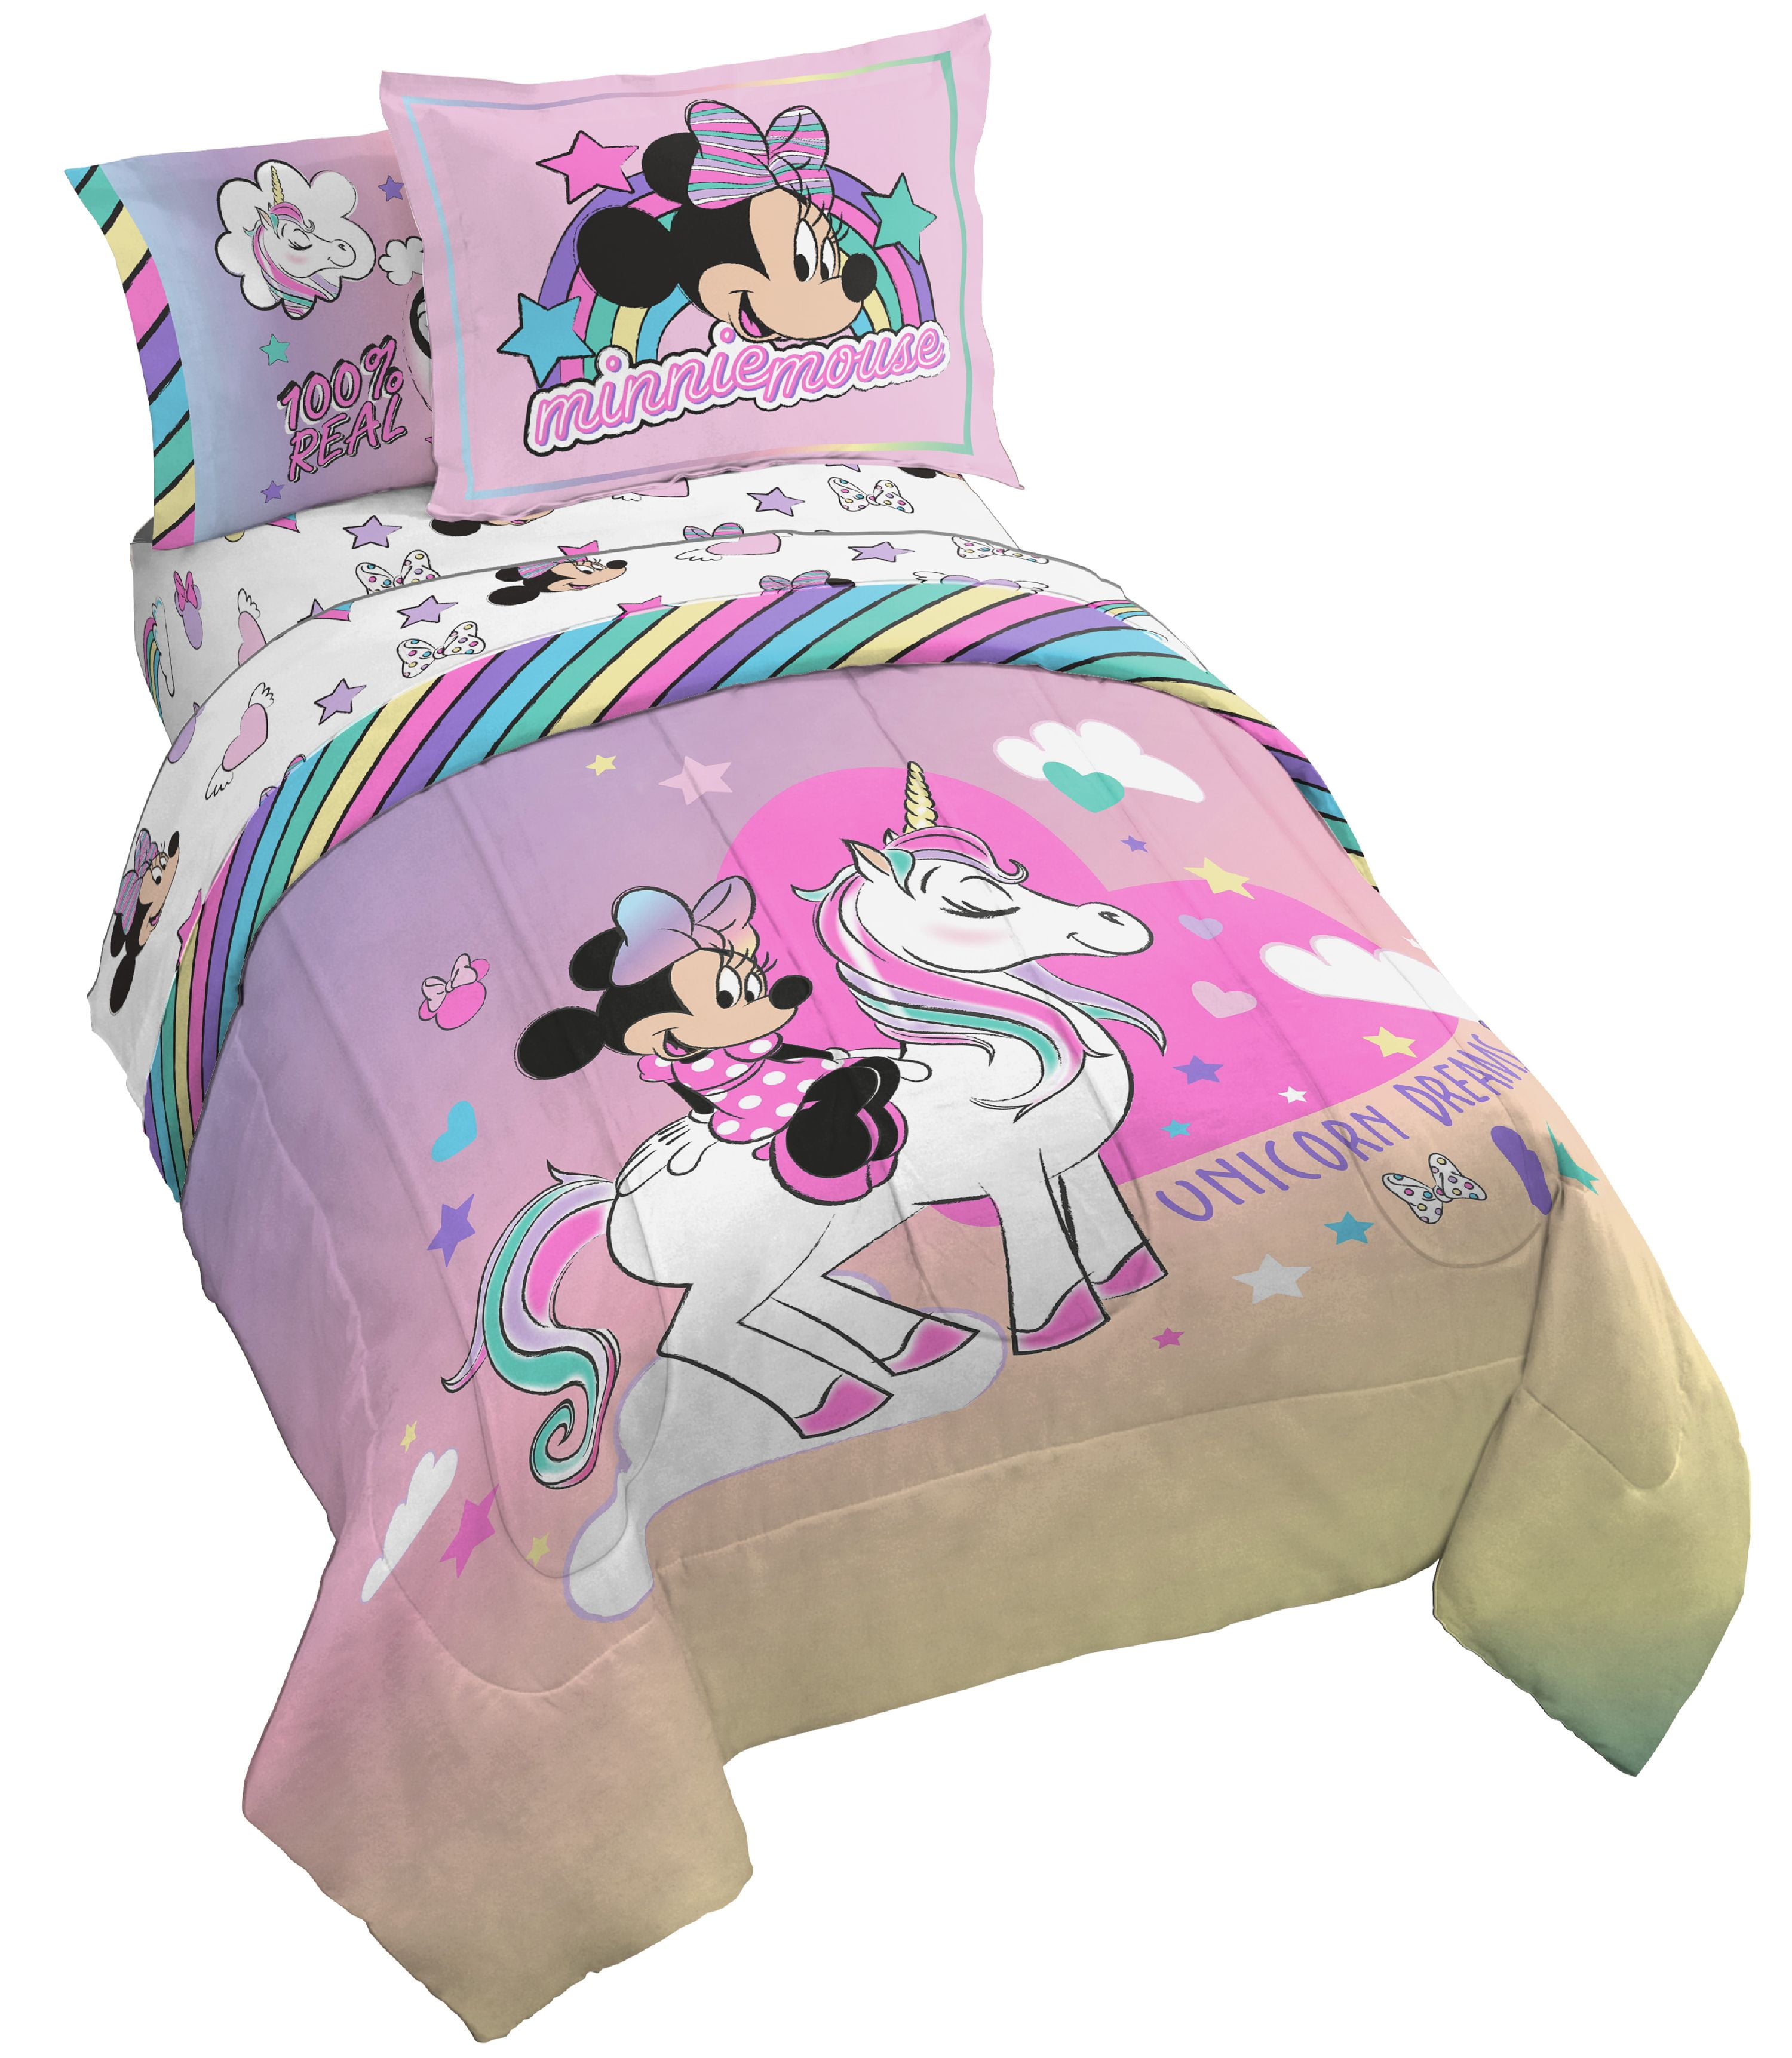 Minnie Mouse Rainbow Unicorn Dreams, Minnie Mouse Bunk Beds